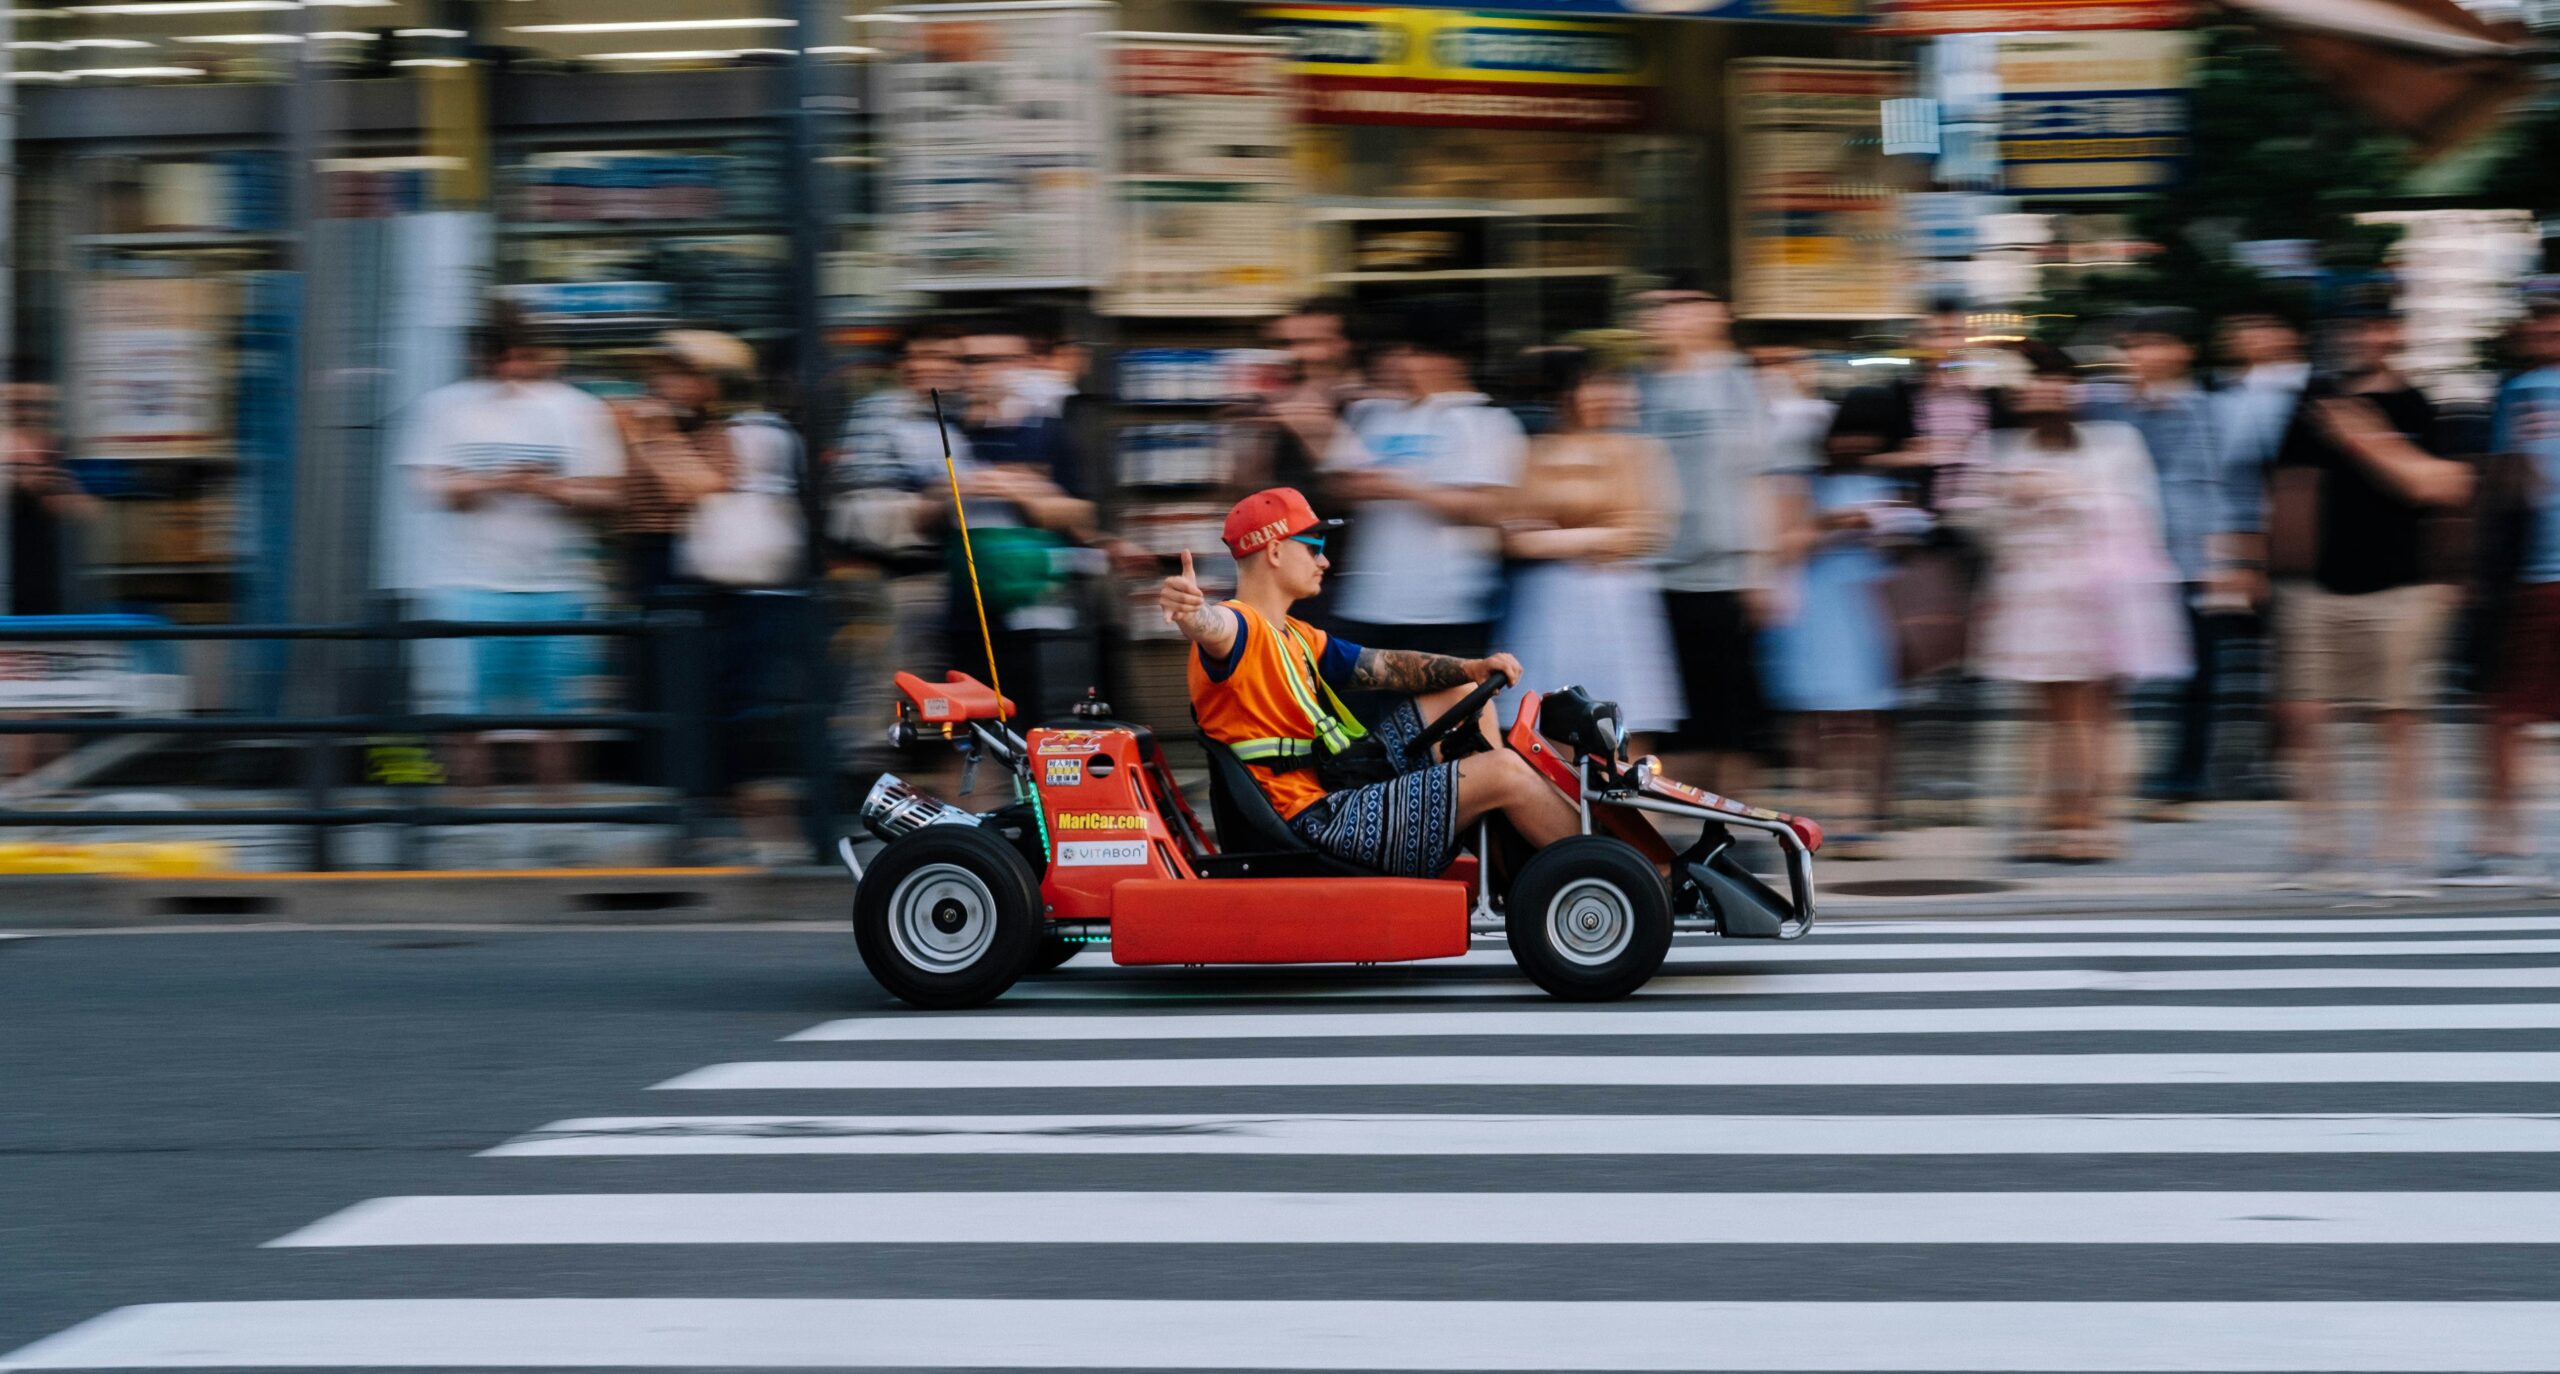 a man zooming through the streets of Akihabara on a Mario Kart